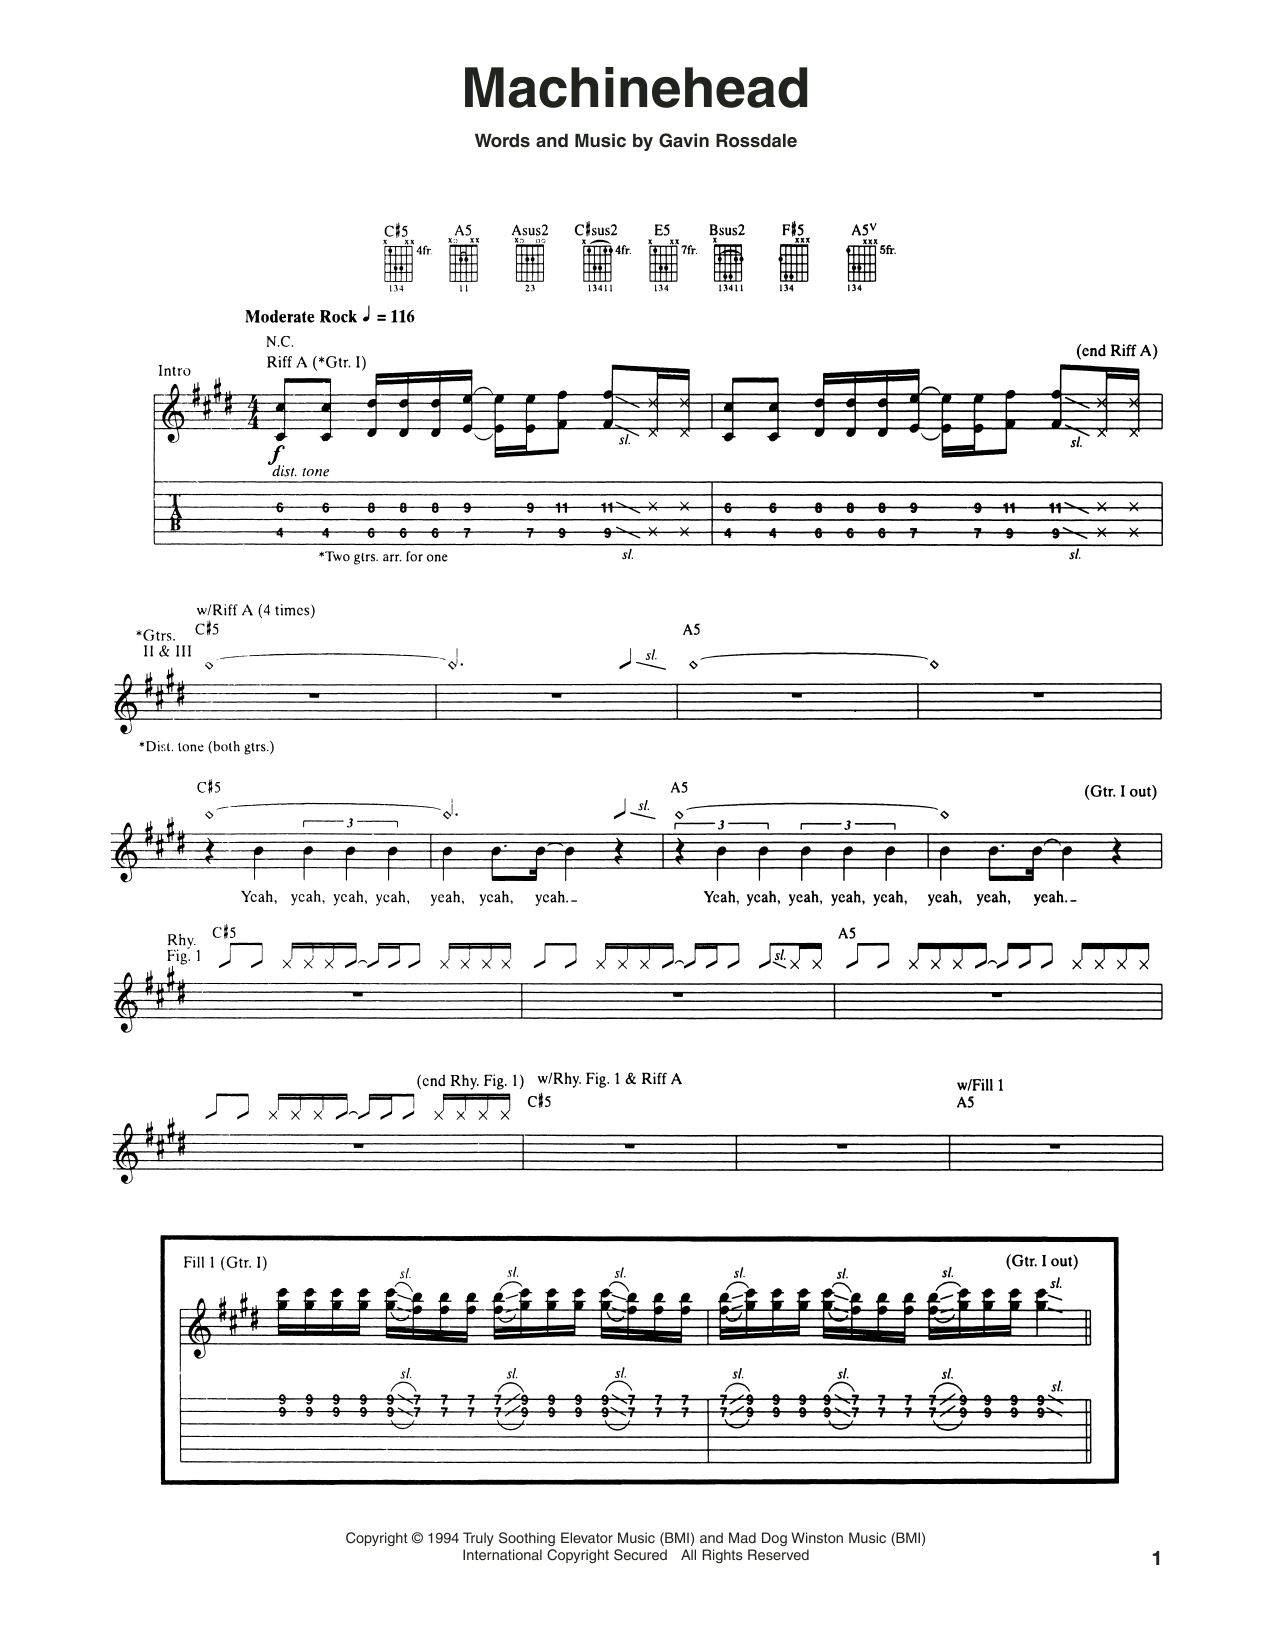 Bush Machinehead Sheet Music Notes & Chords for Guitar Tab - Download or Print PDF